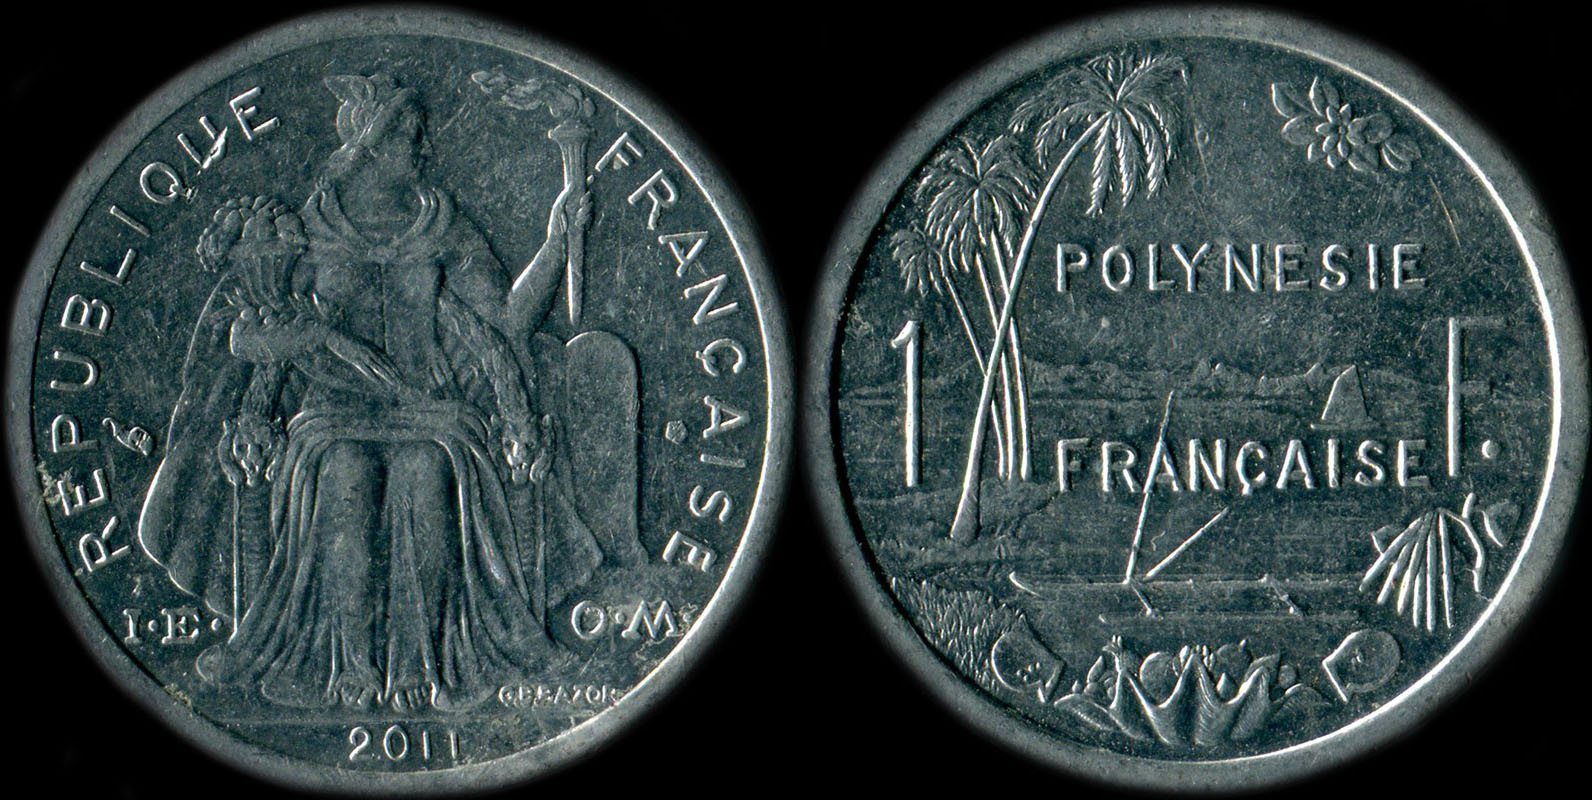 Pice 1 franc 2011  - I.E.O.M. Polynsie franaise